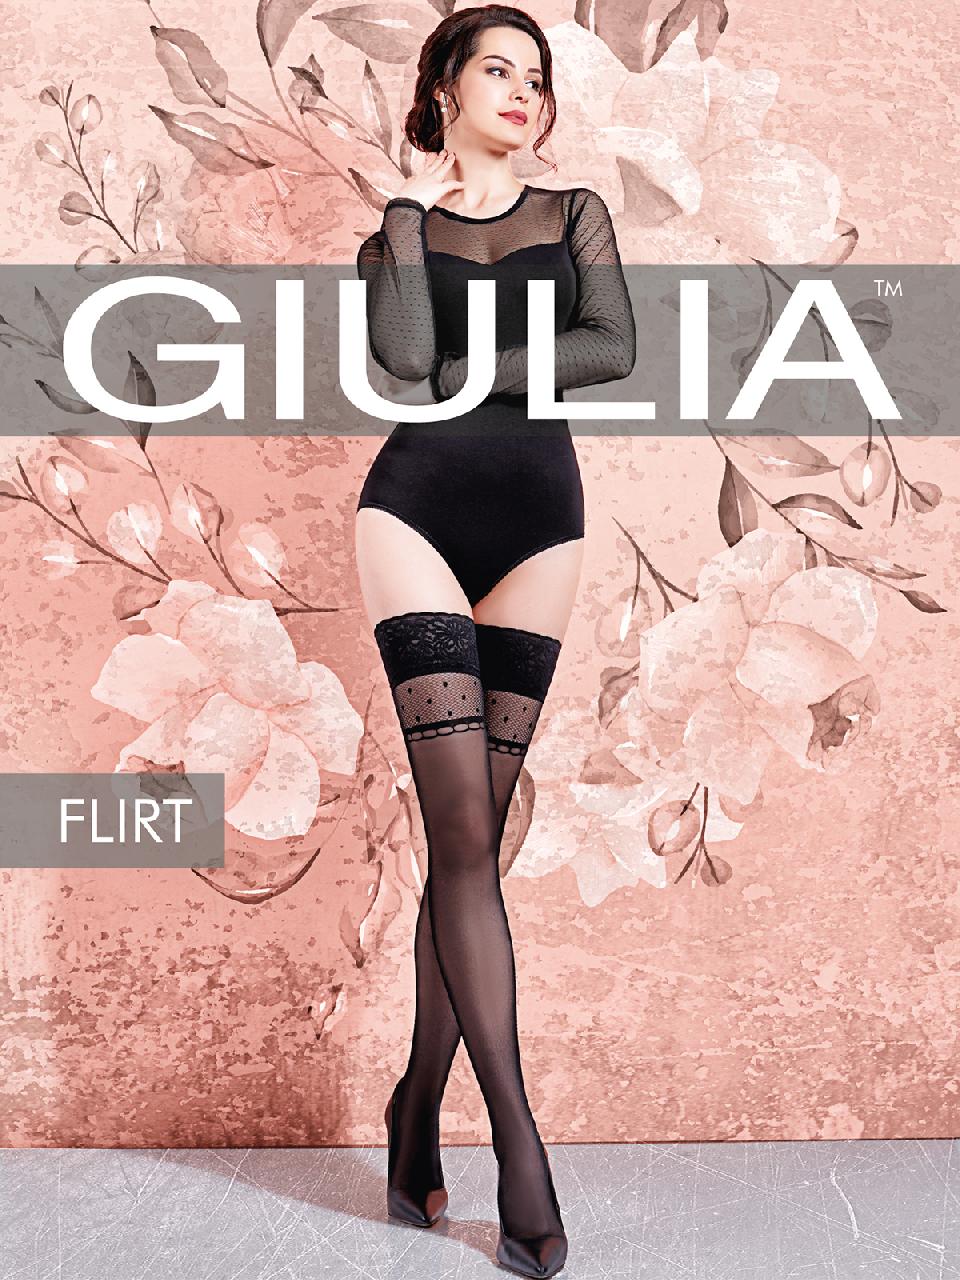 Giulia Flirt 01 /чулки/ bianco 1/2-XS/S